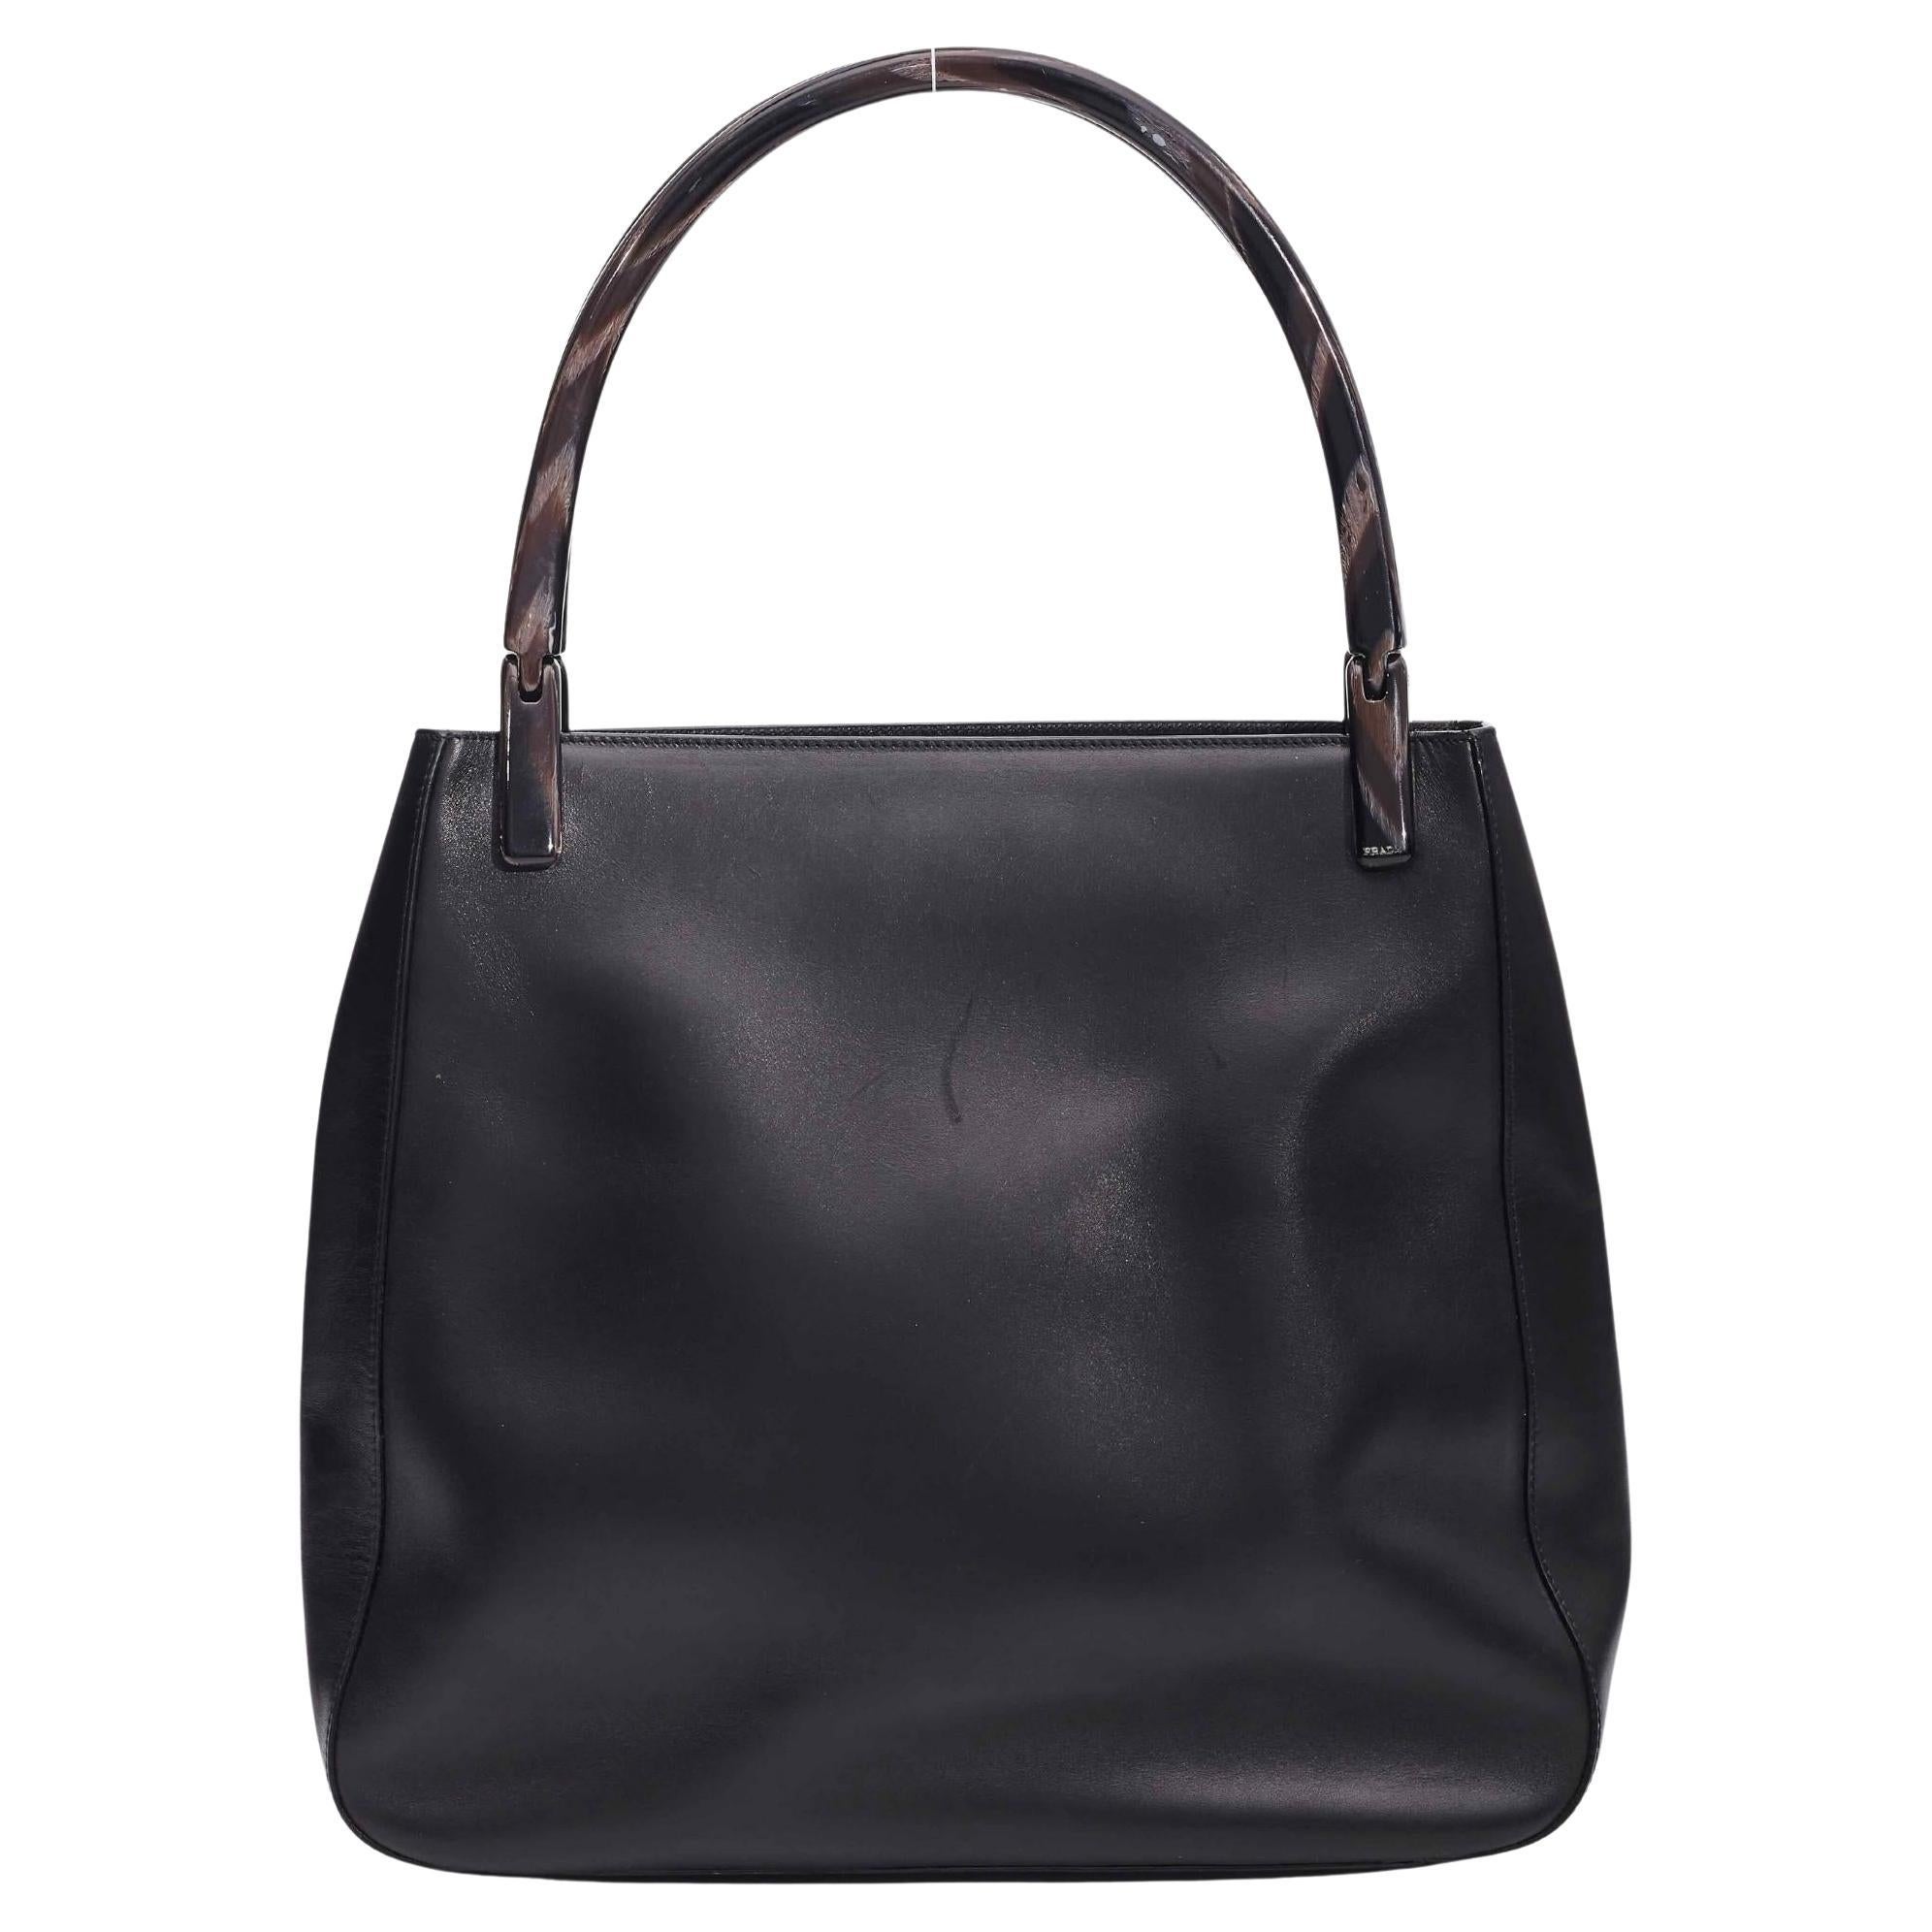 Prada Black Leather Tall Acrylic Handle Tote Bag